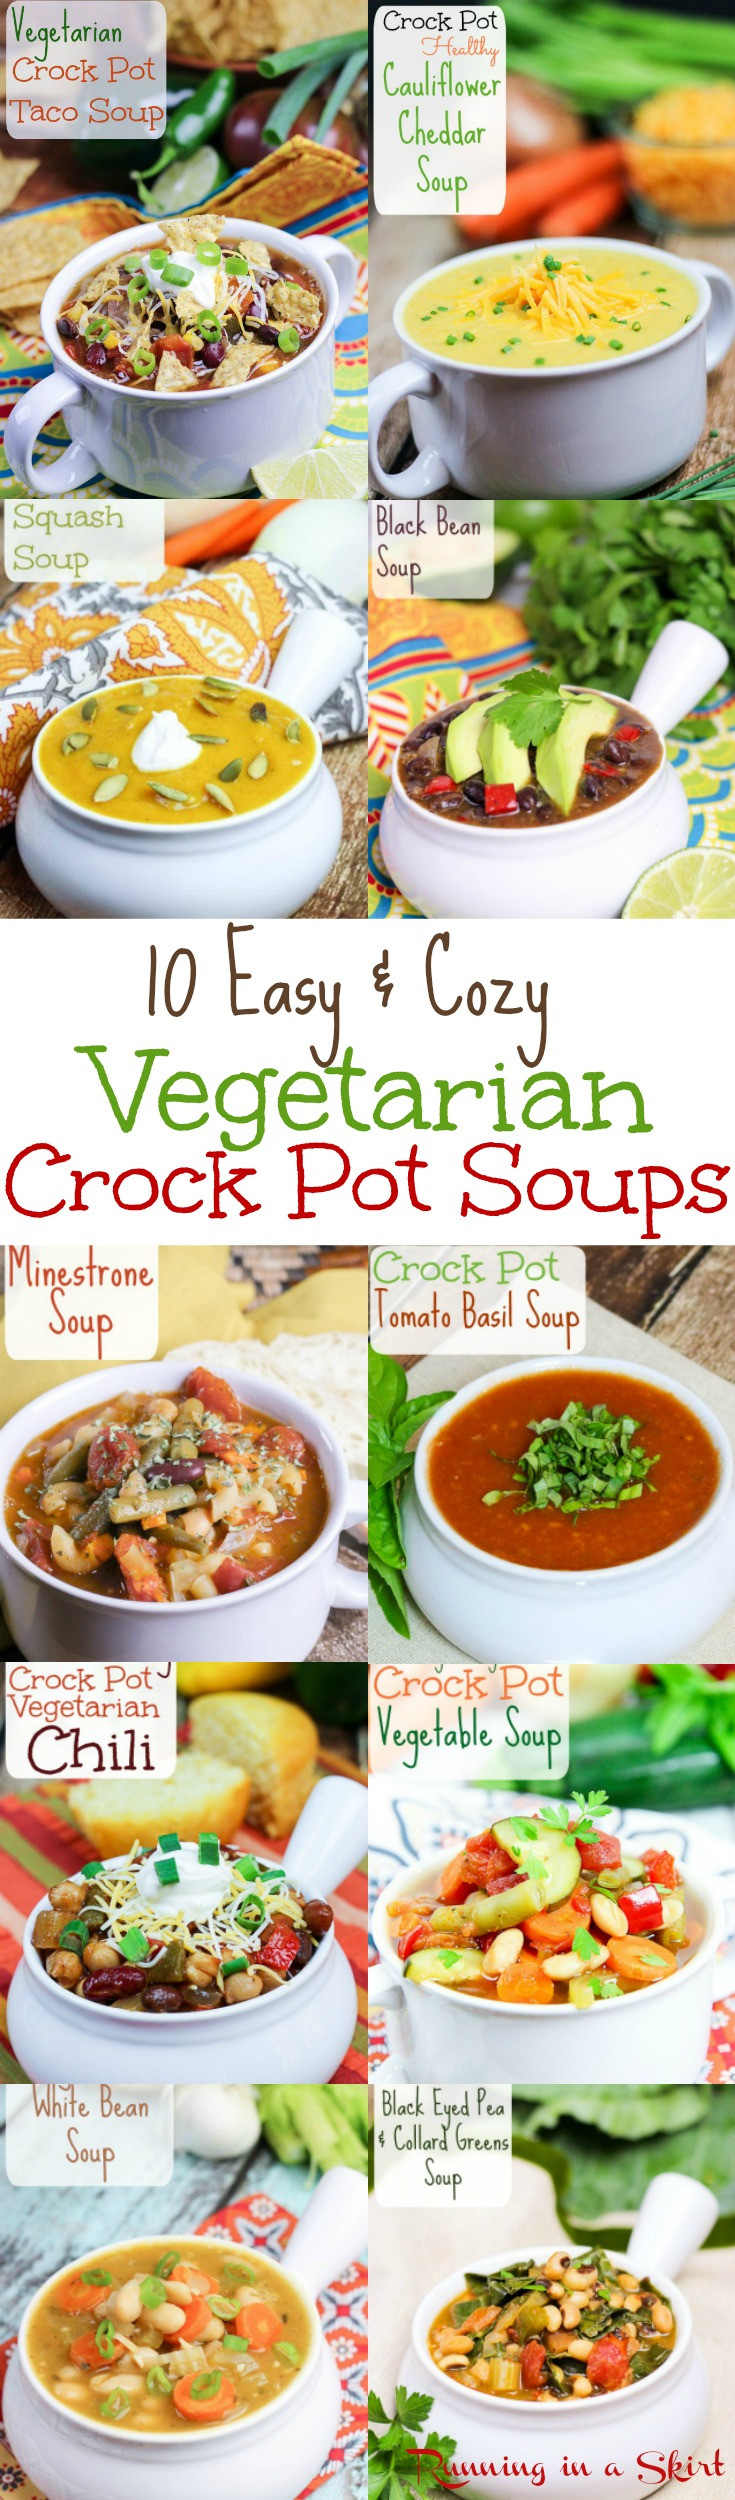 Vegetarian Crock Pot Dinners
 10 Cozy Ve arian Crock Pot Soup recipes